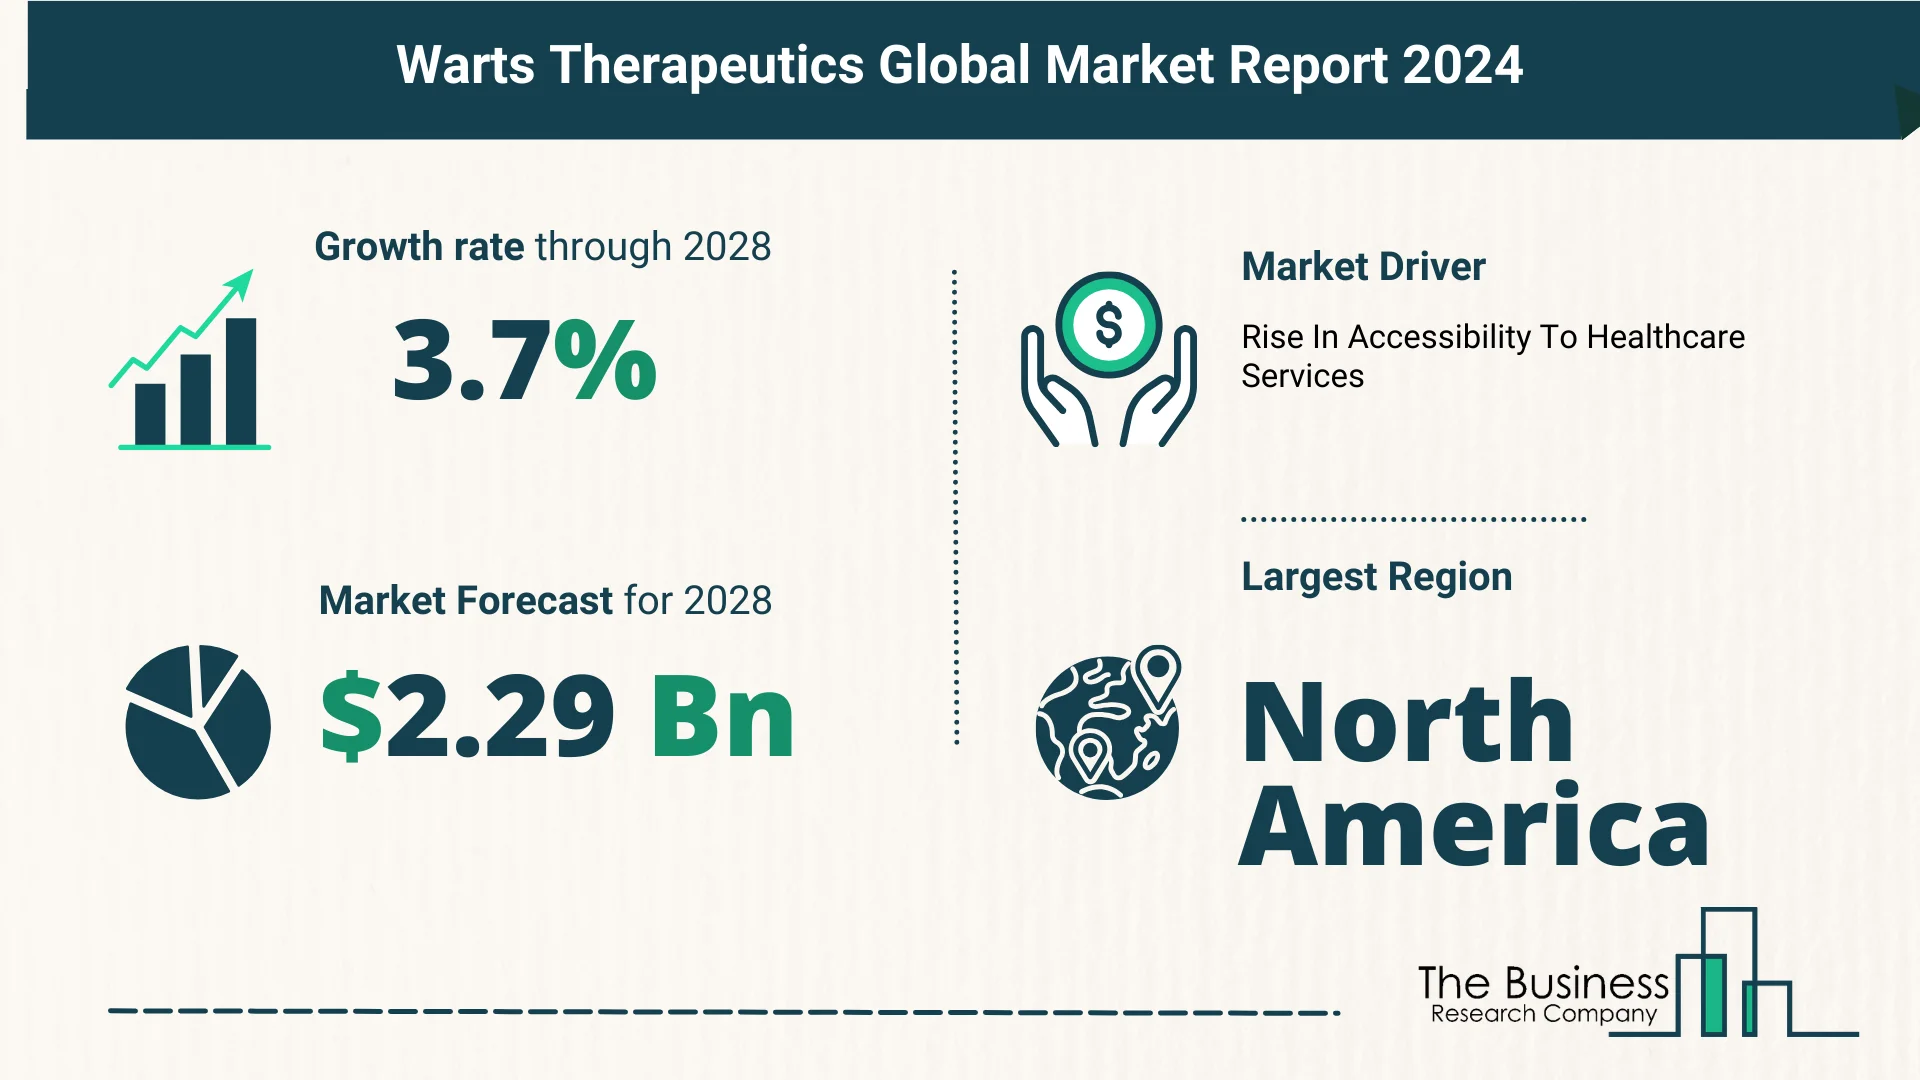 Global Warts Therapeutics Market